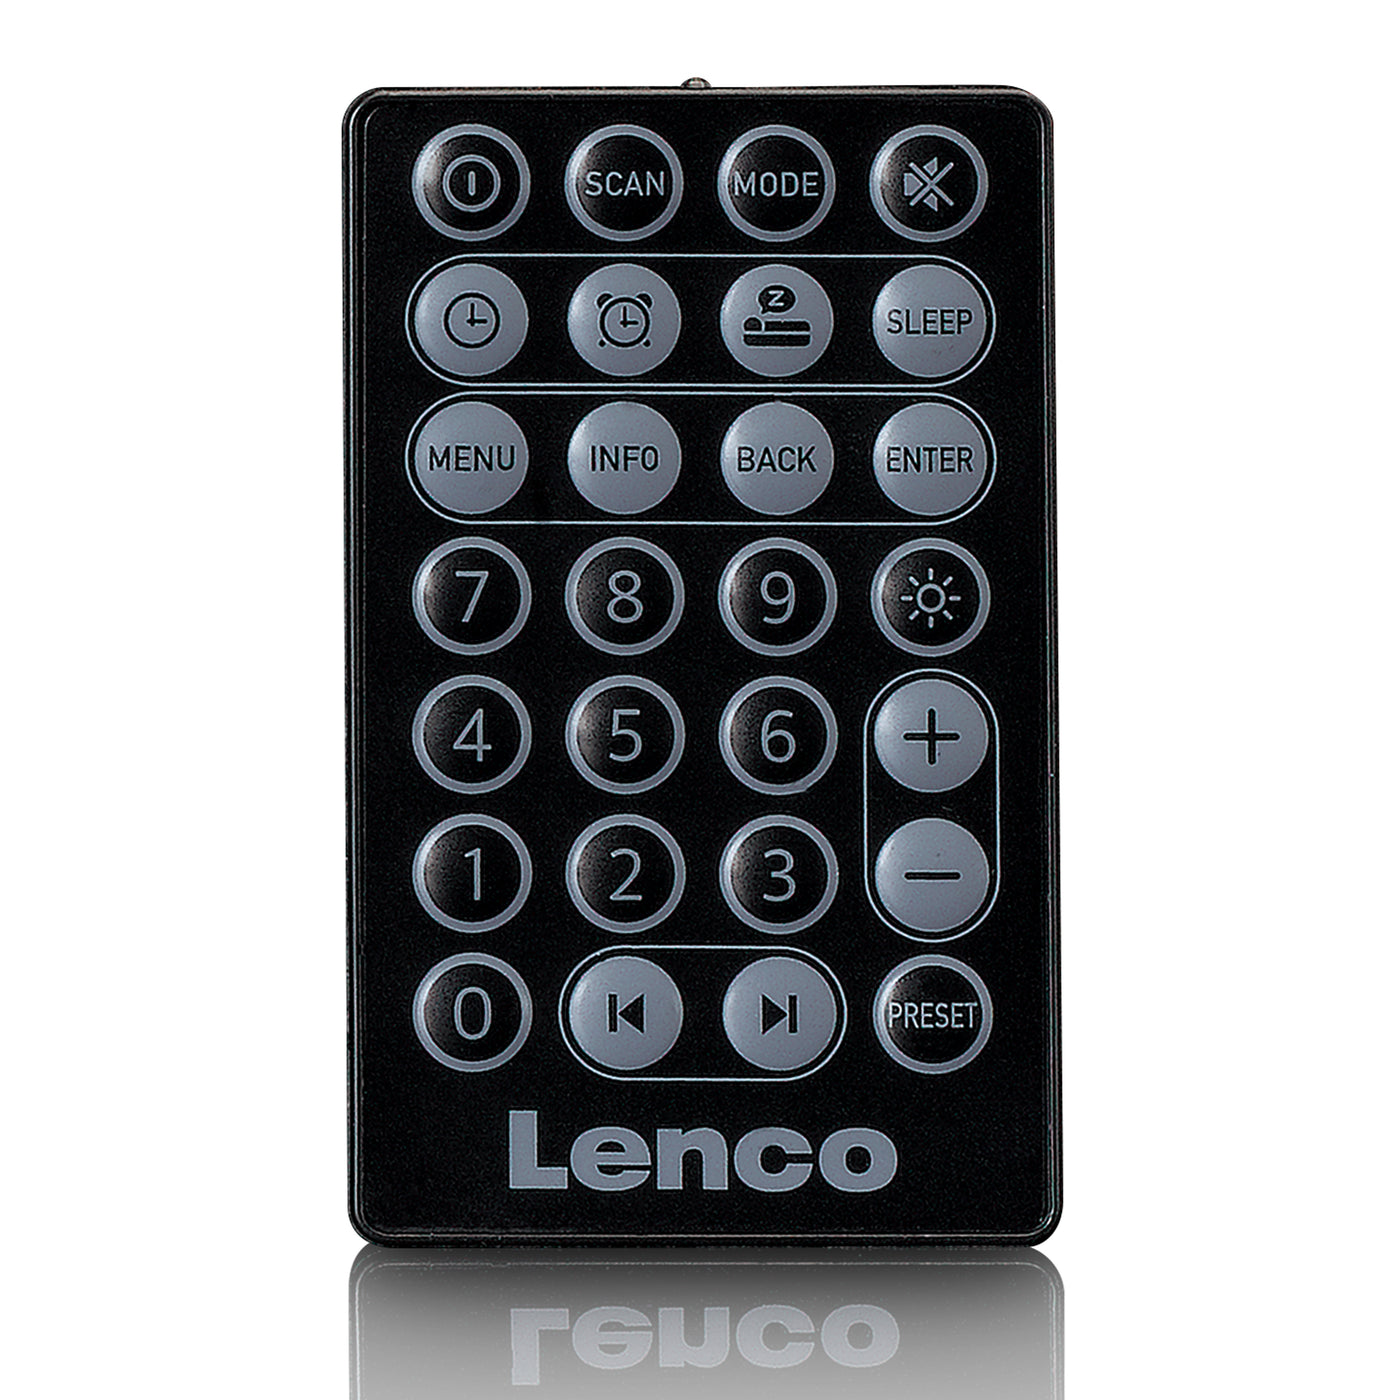 LENCO PDR-051BKSI - Portable DAB+ Radio AUX-inp and Lenco-Catalog with – FM Bluetooth®